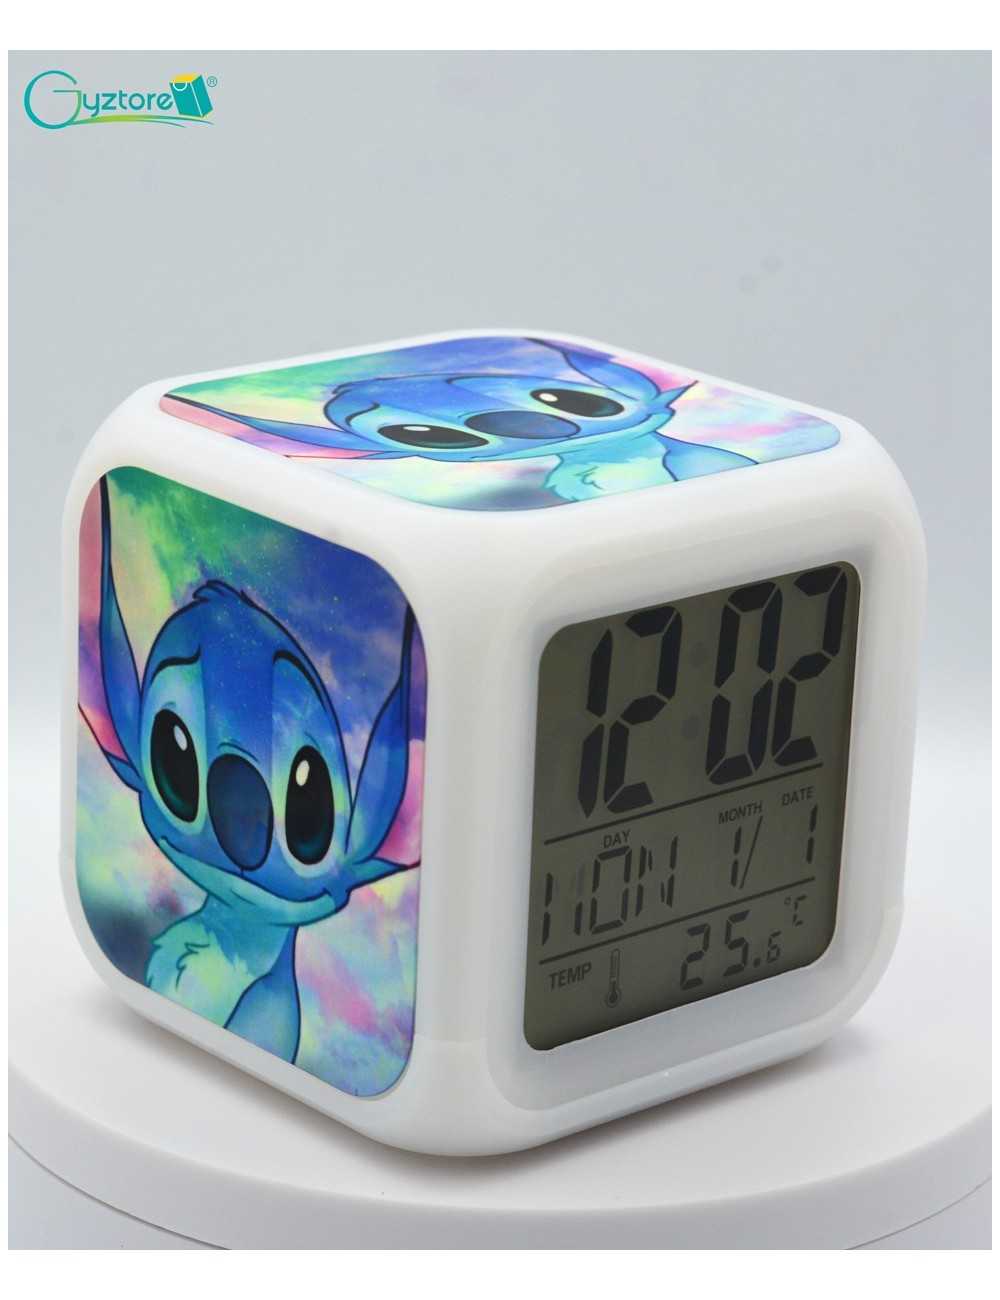 Relojes digitales “Stitch Galaxy” con LED multicolor